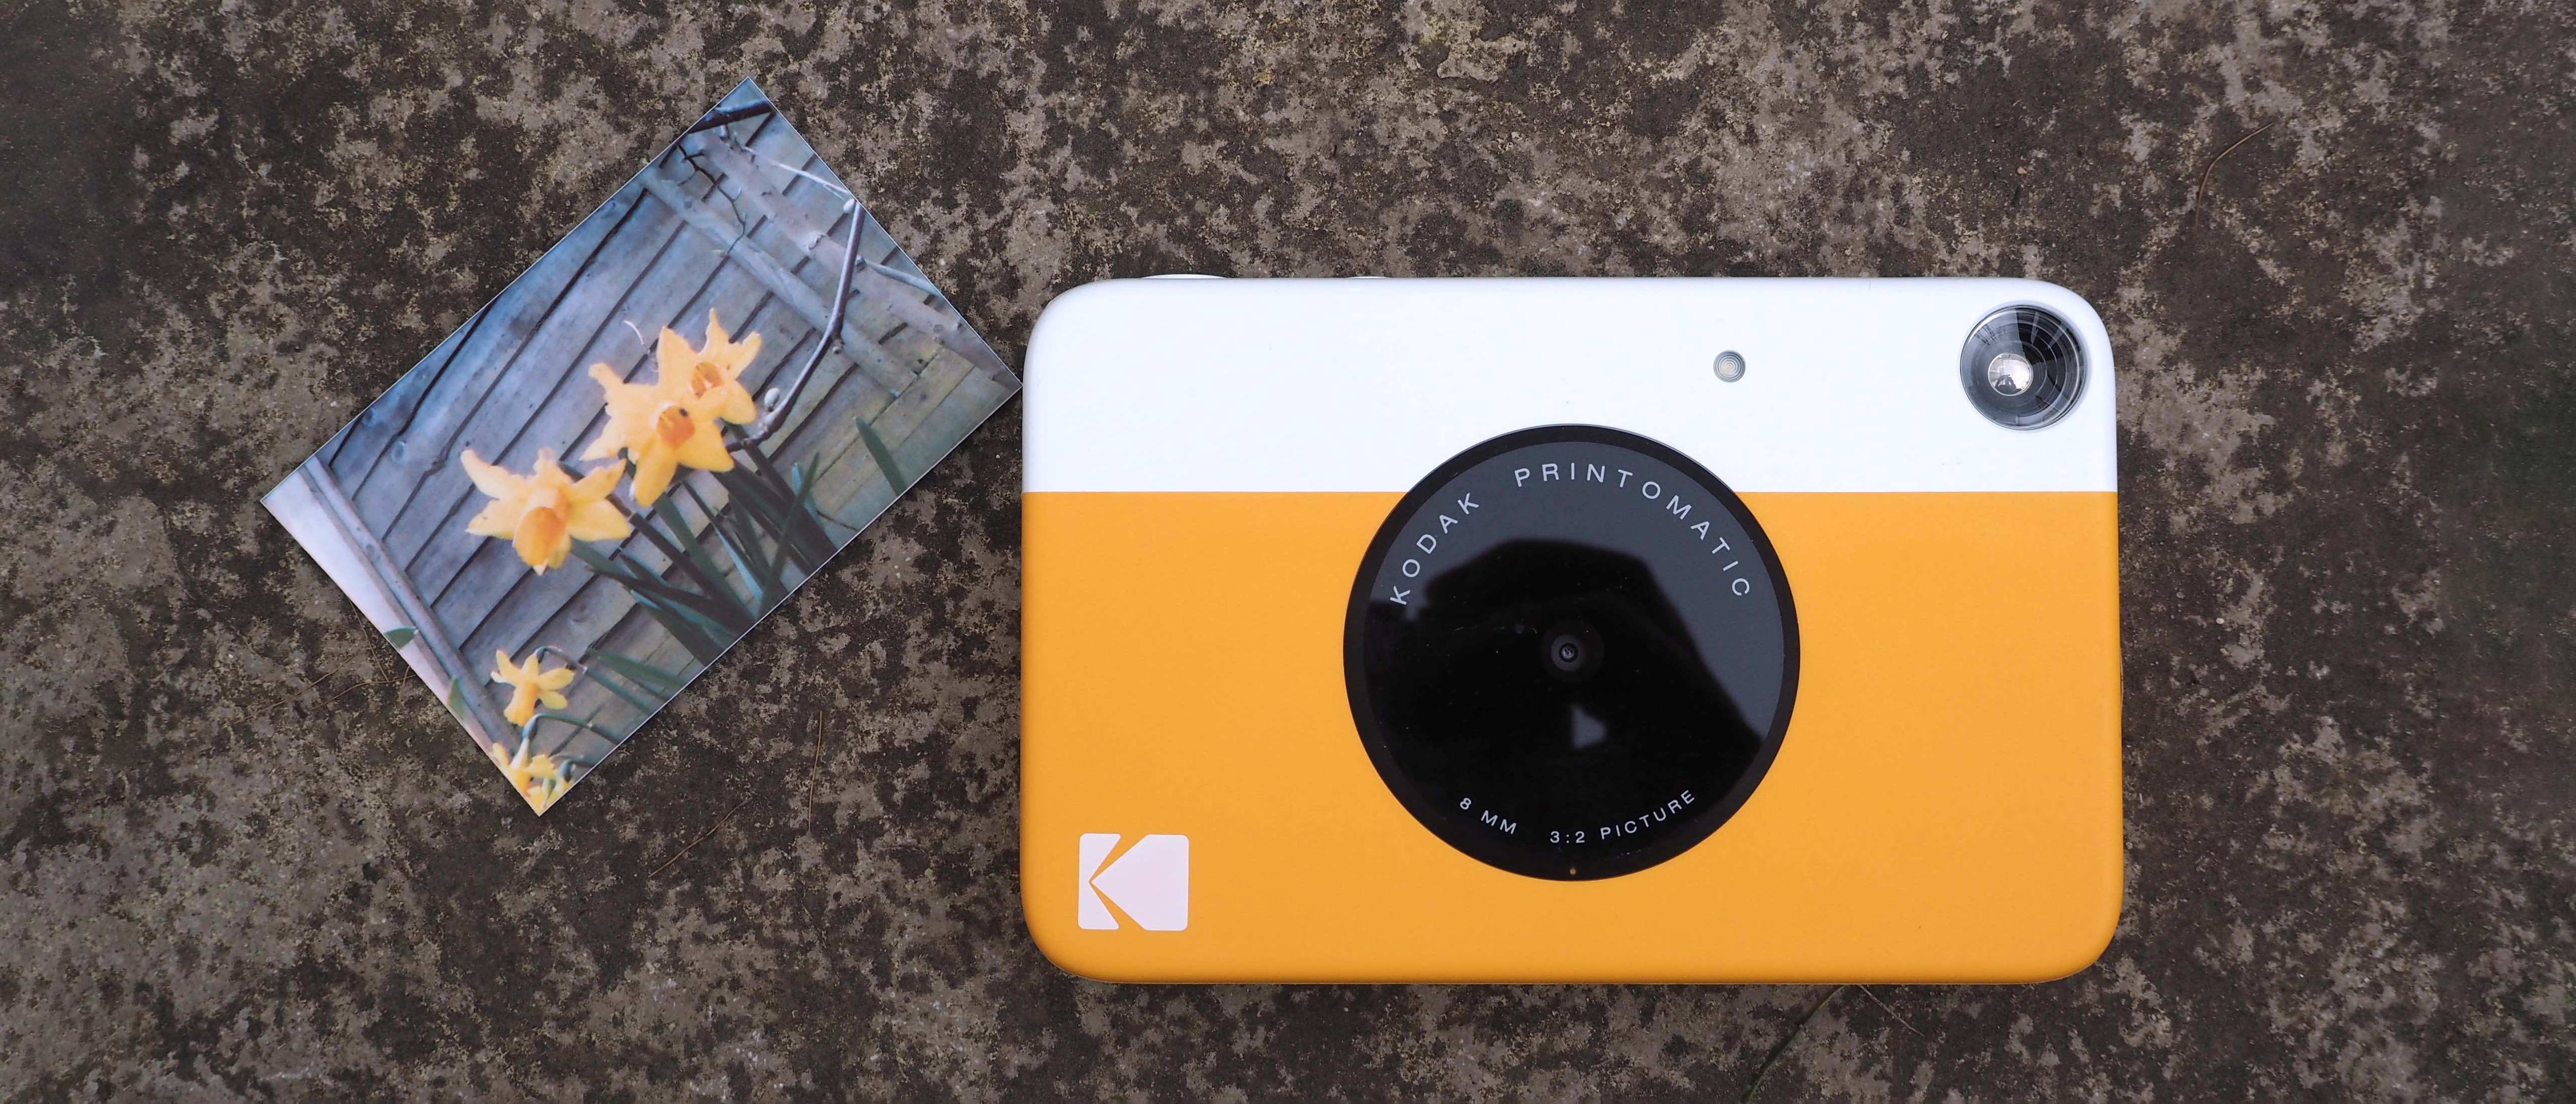 Kodak Printomatic Instant Film Camera